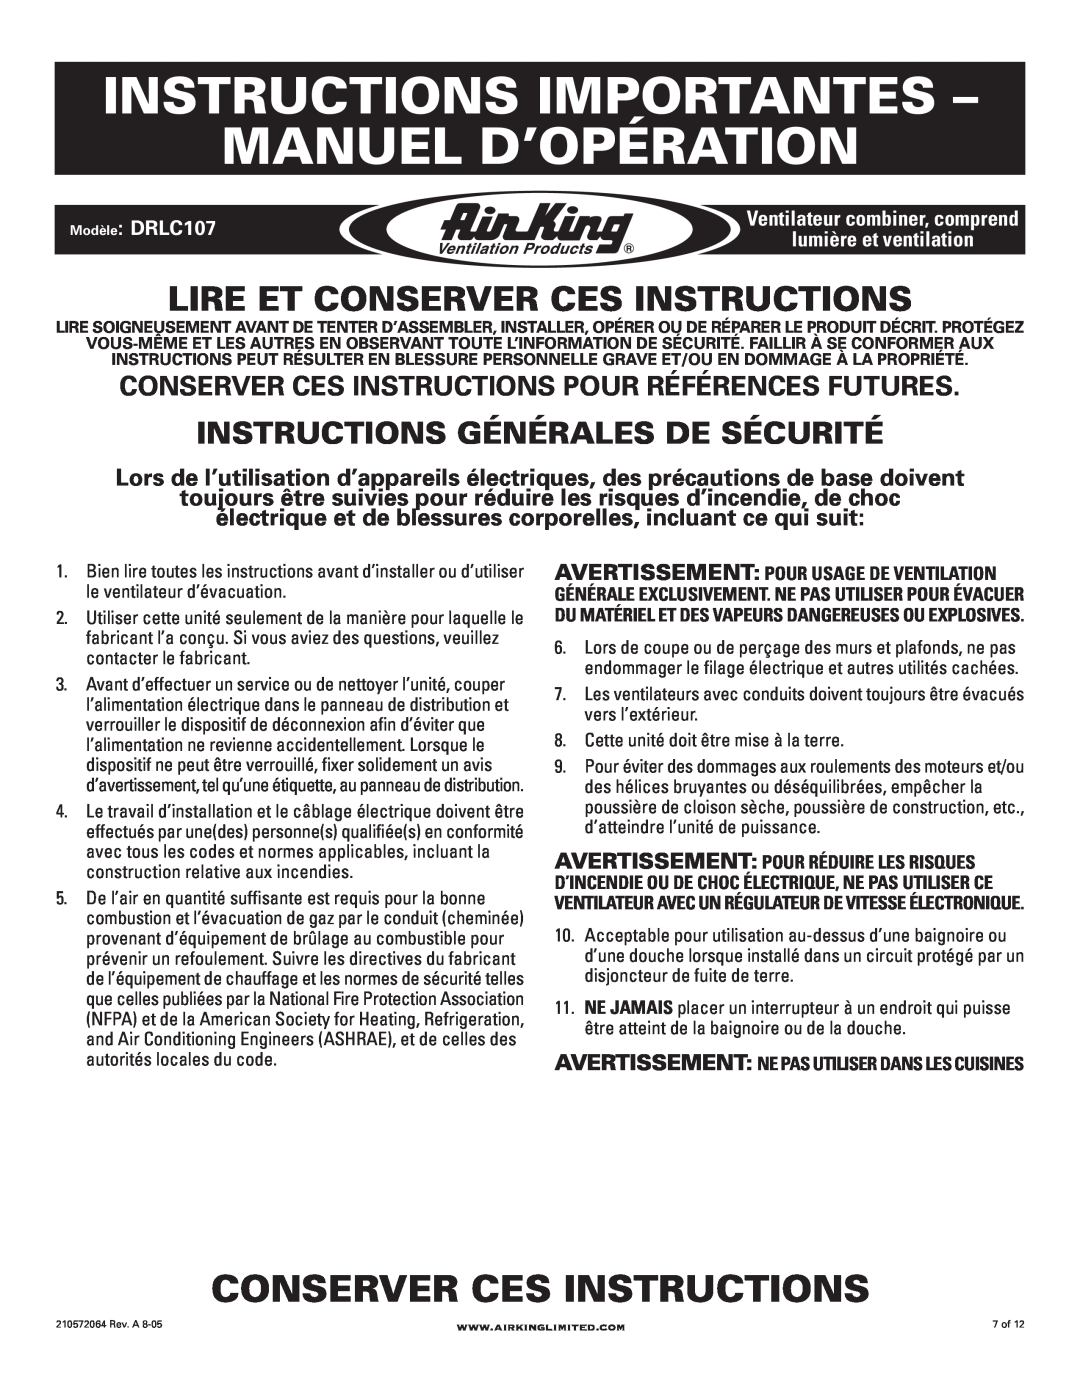 Air King DRLC107 manual Instructions Importantes - Manuel D’Opération, Conserver Ces Instructions 